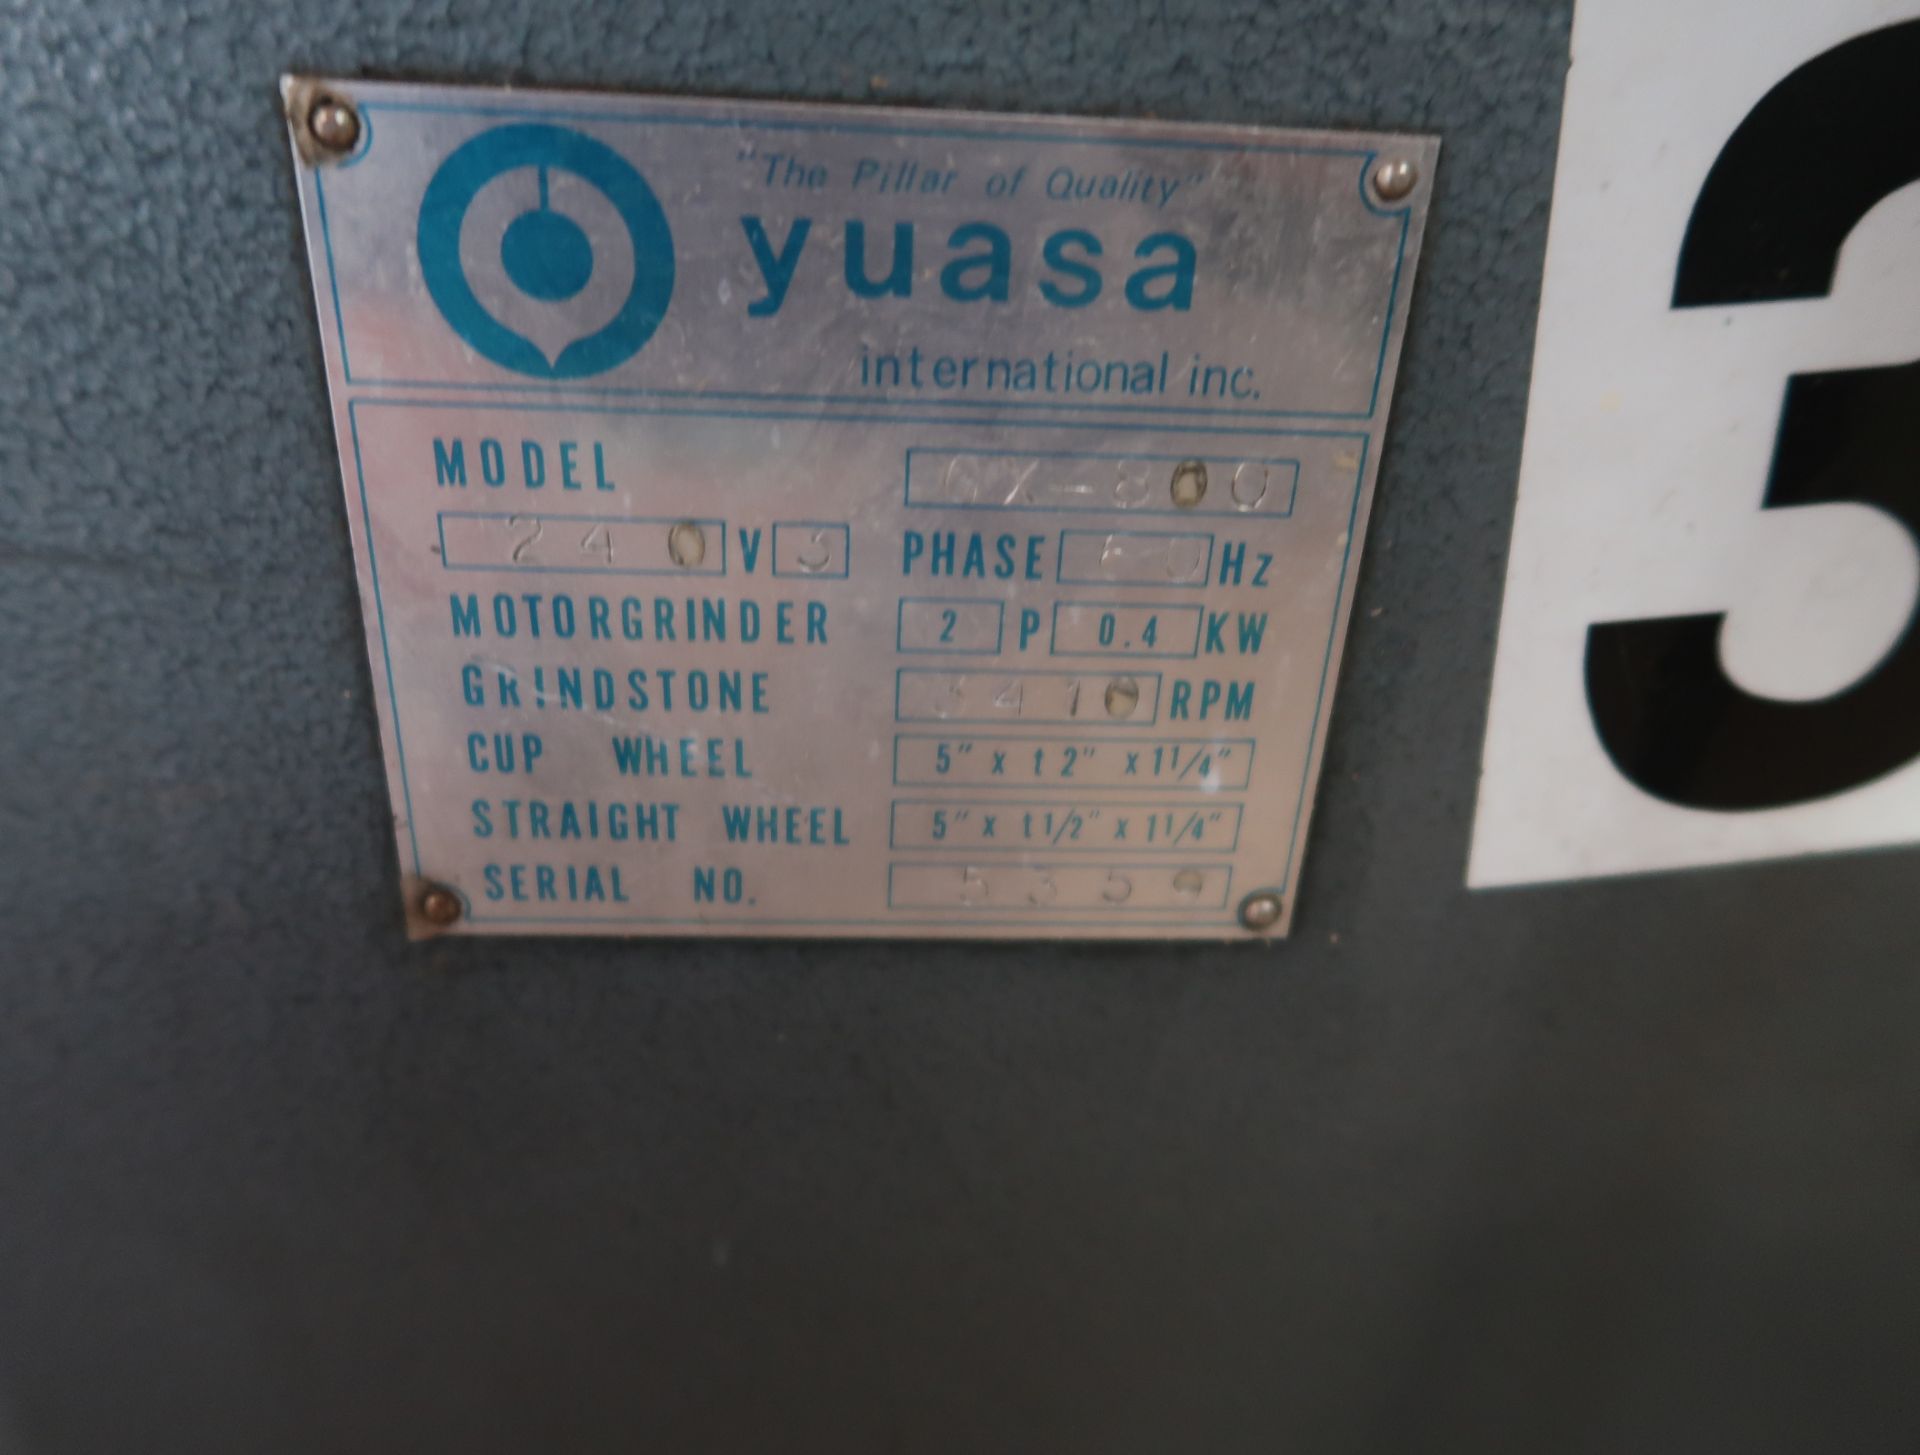 YUASA TOOL ROOM GRINDER MDL GX-800 SN. 5359 - Image 2 of 4